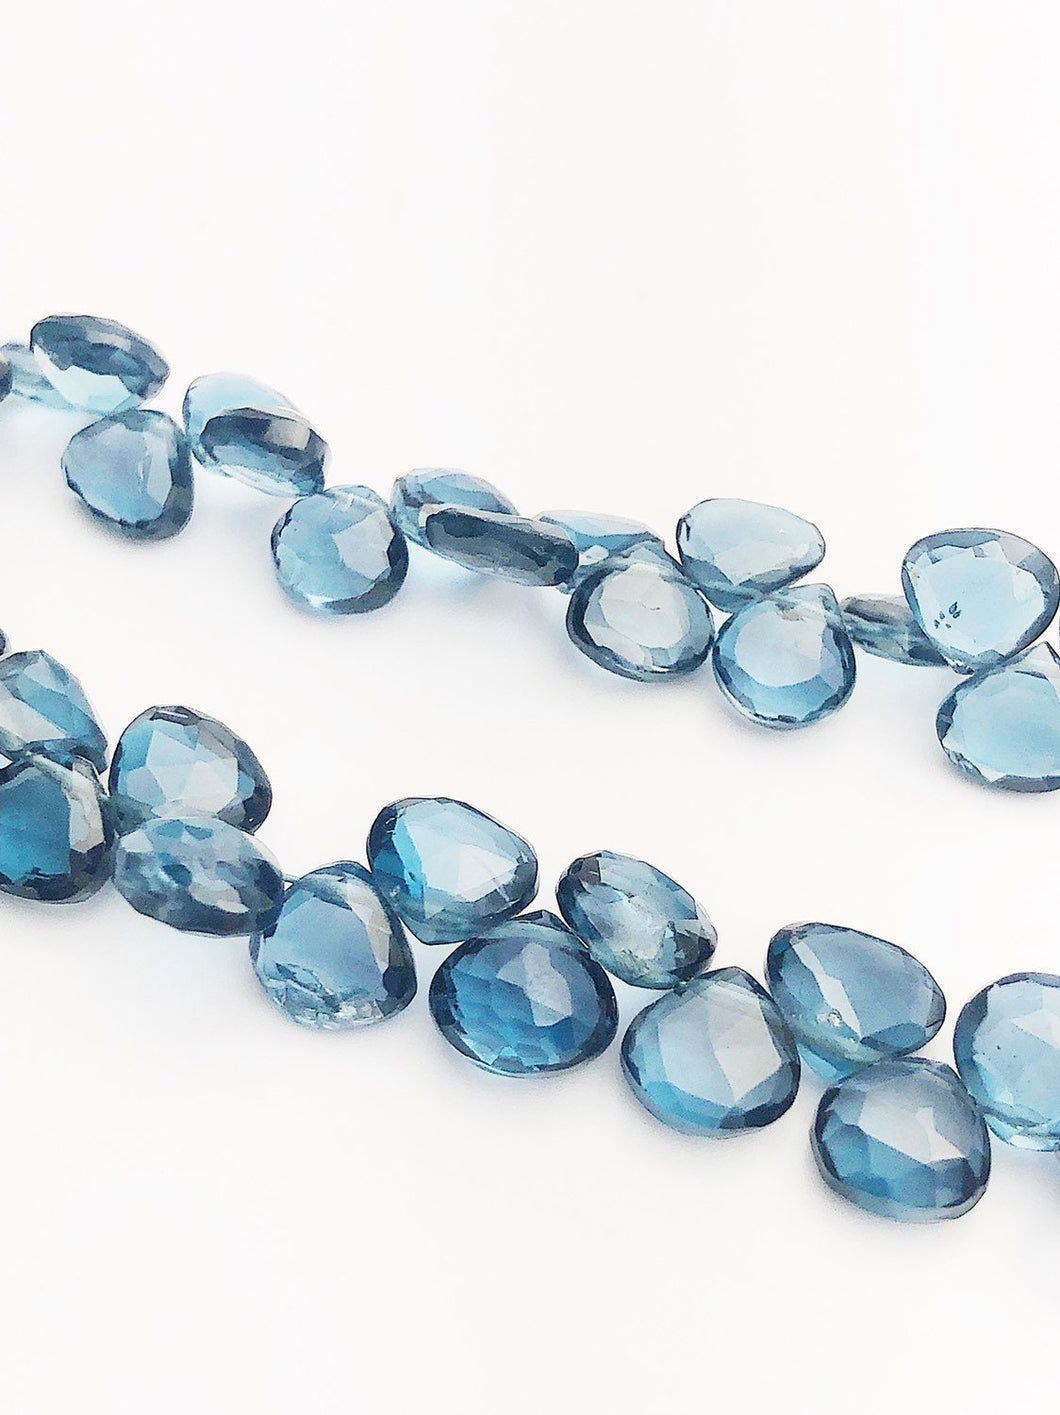 HALF OFF SALE - London Blue Topaz Flat Faceted Round Gemstone Beads, Full Strand, Semi Precious Gemstone, 8